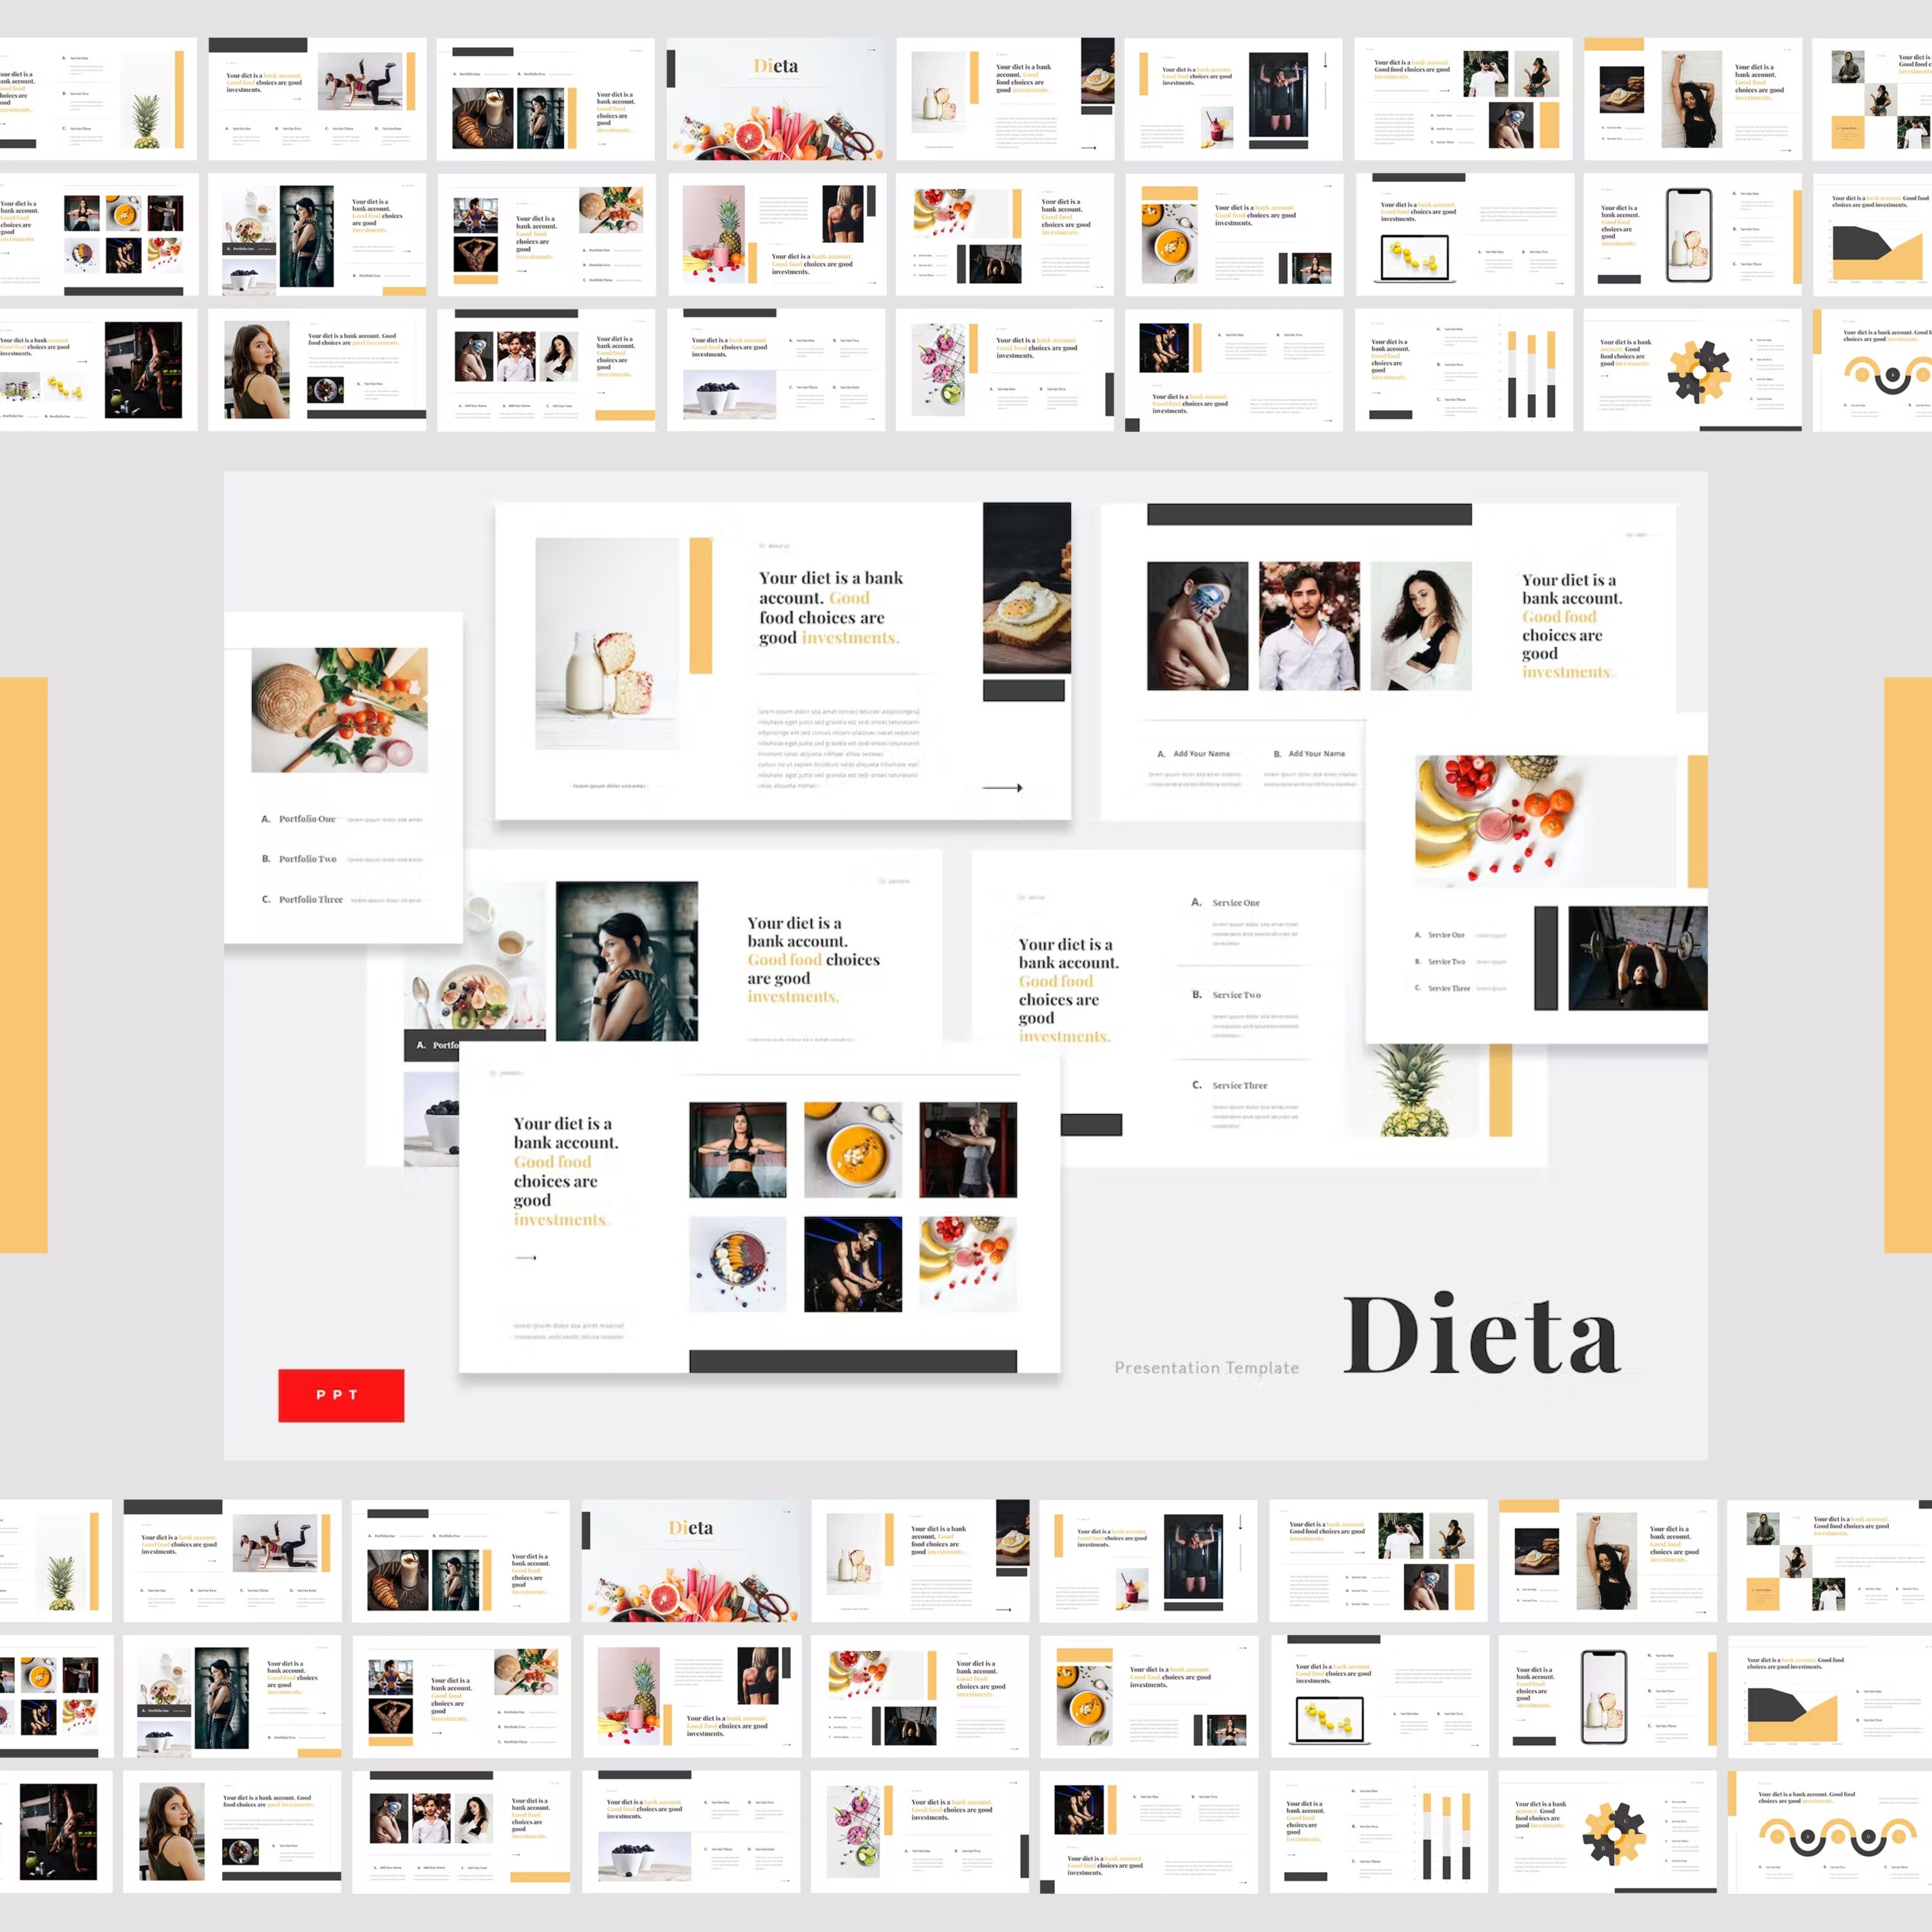 Dieta Diet Plan Food Powerpoint Presentation from naulicrea.